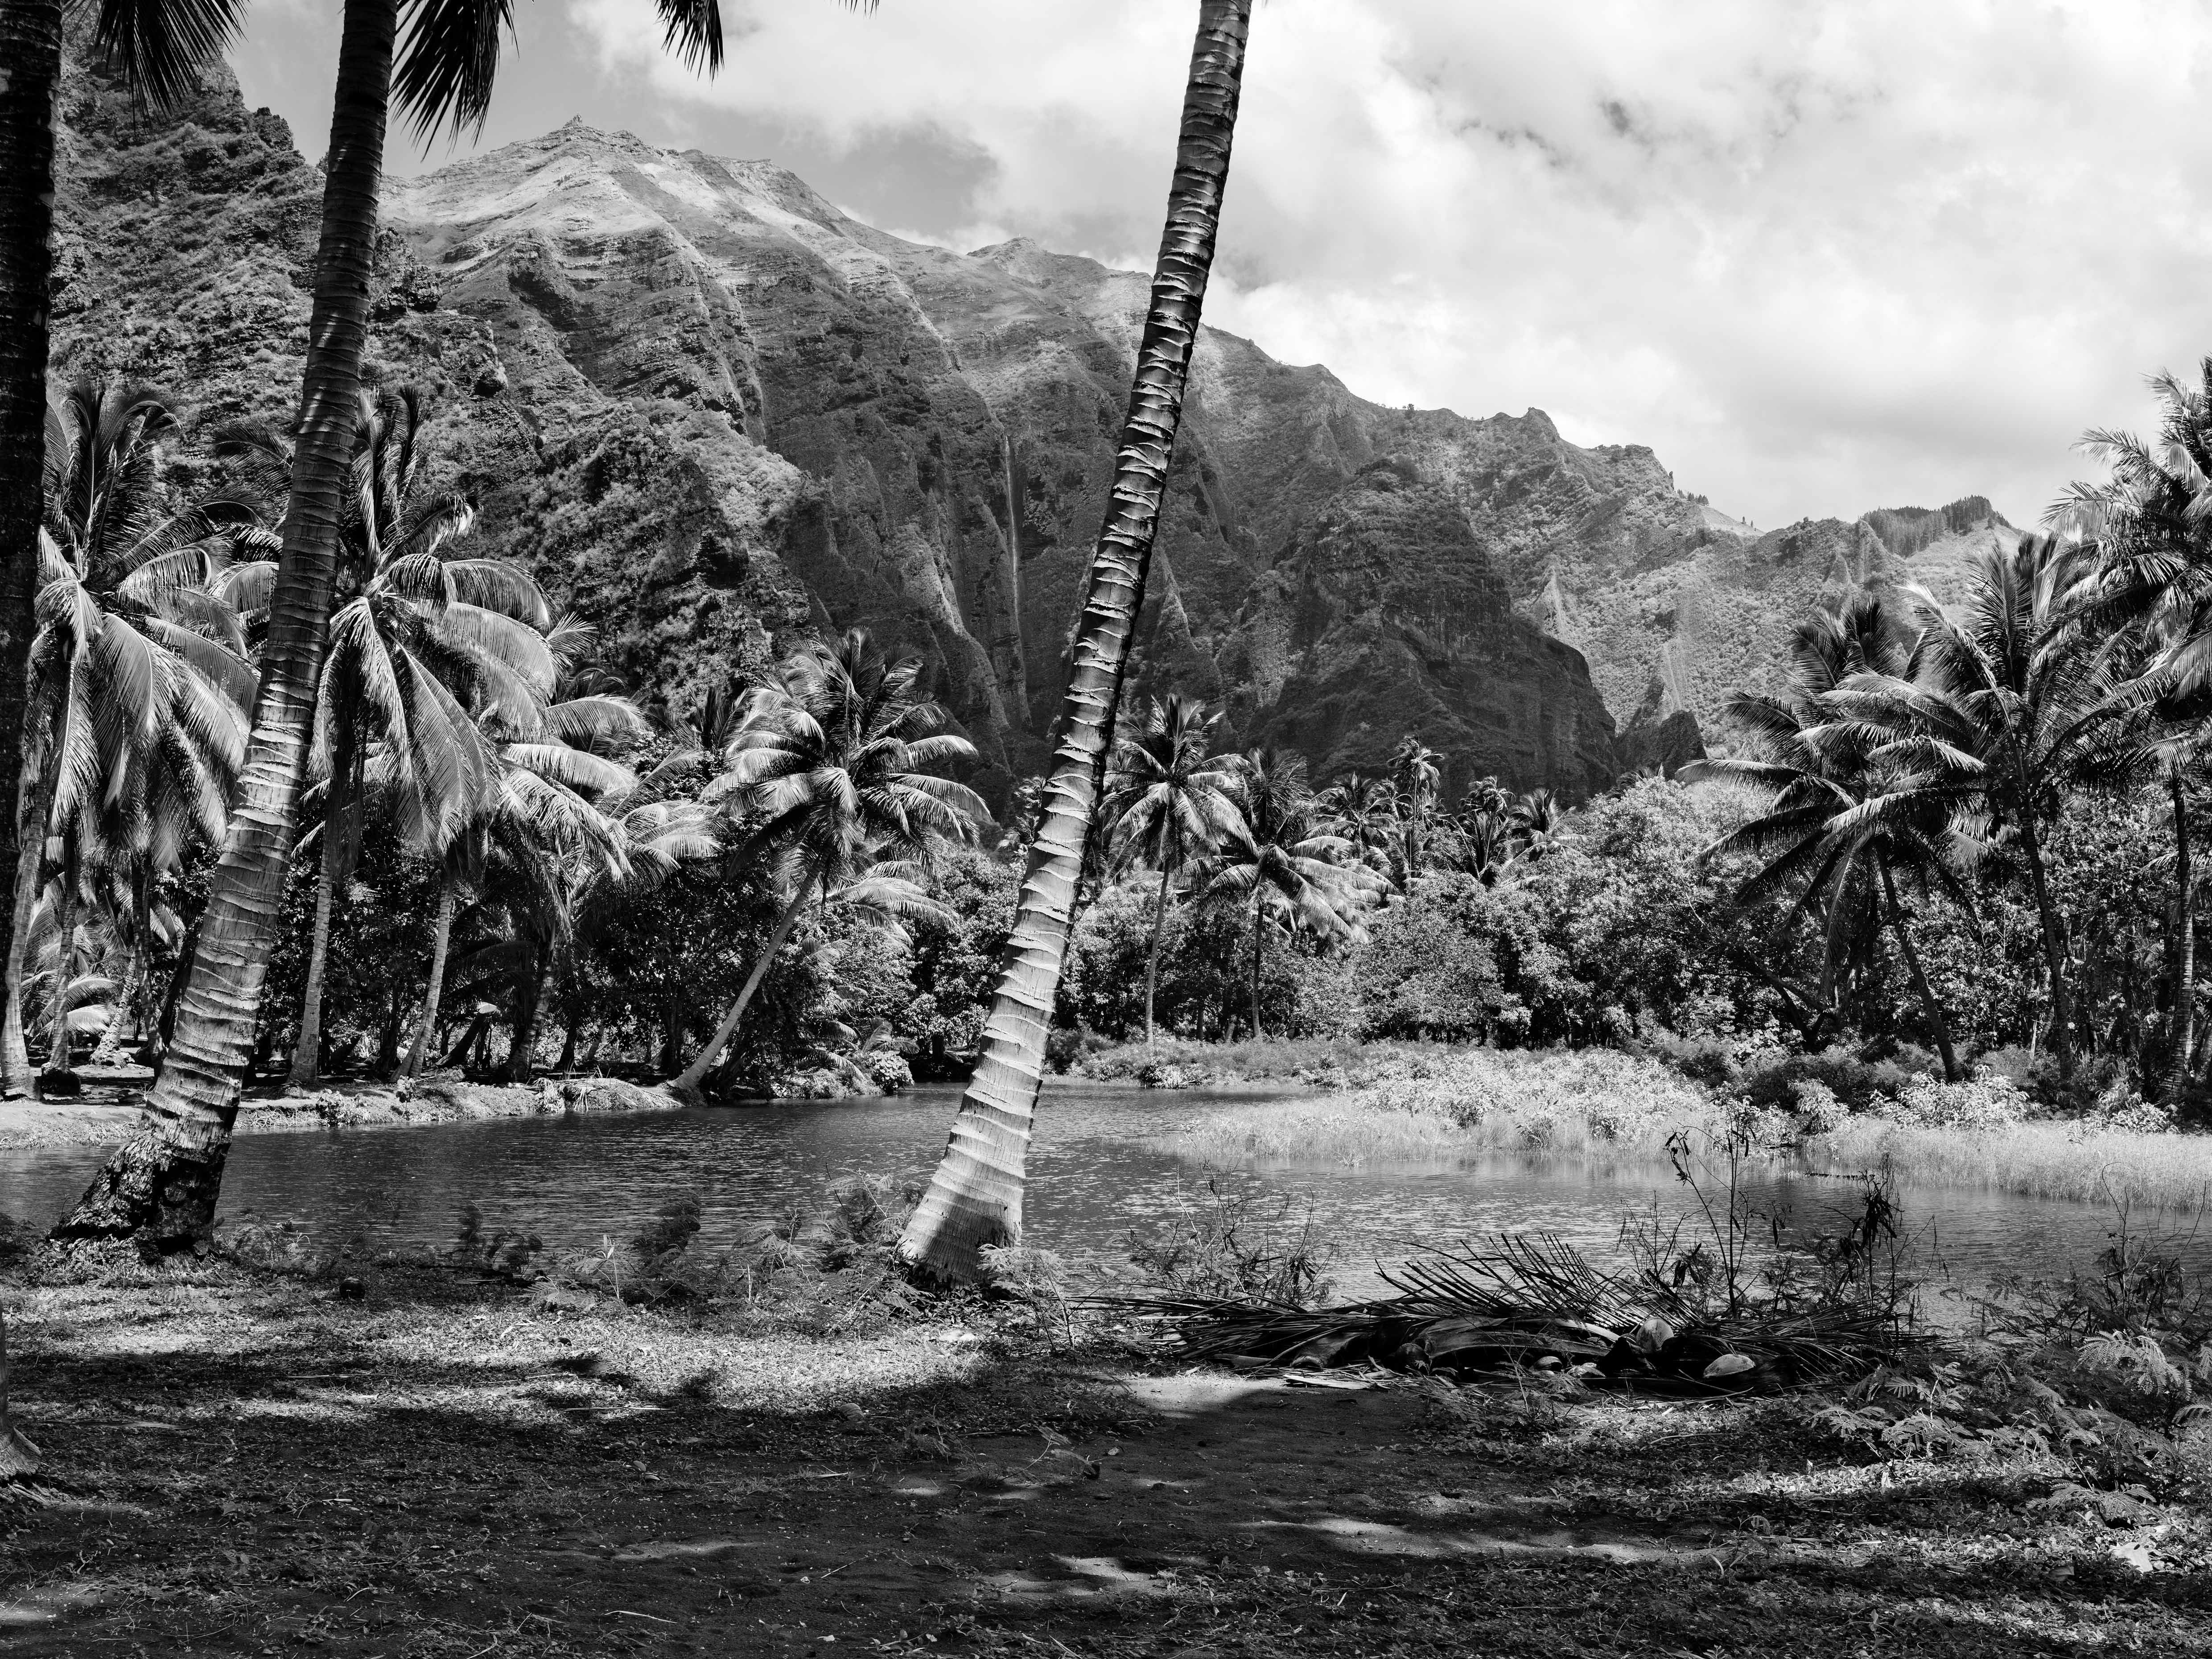  - Nuku Hiva, French Polynesia, 2010